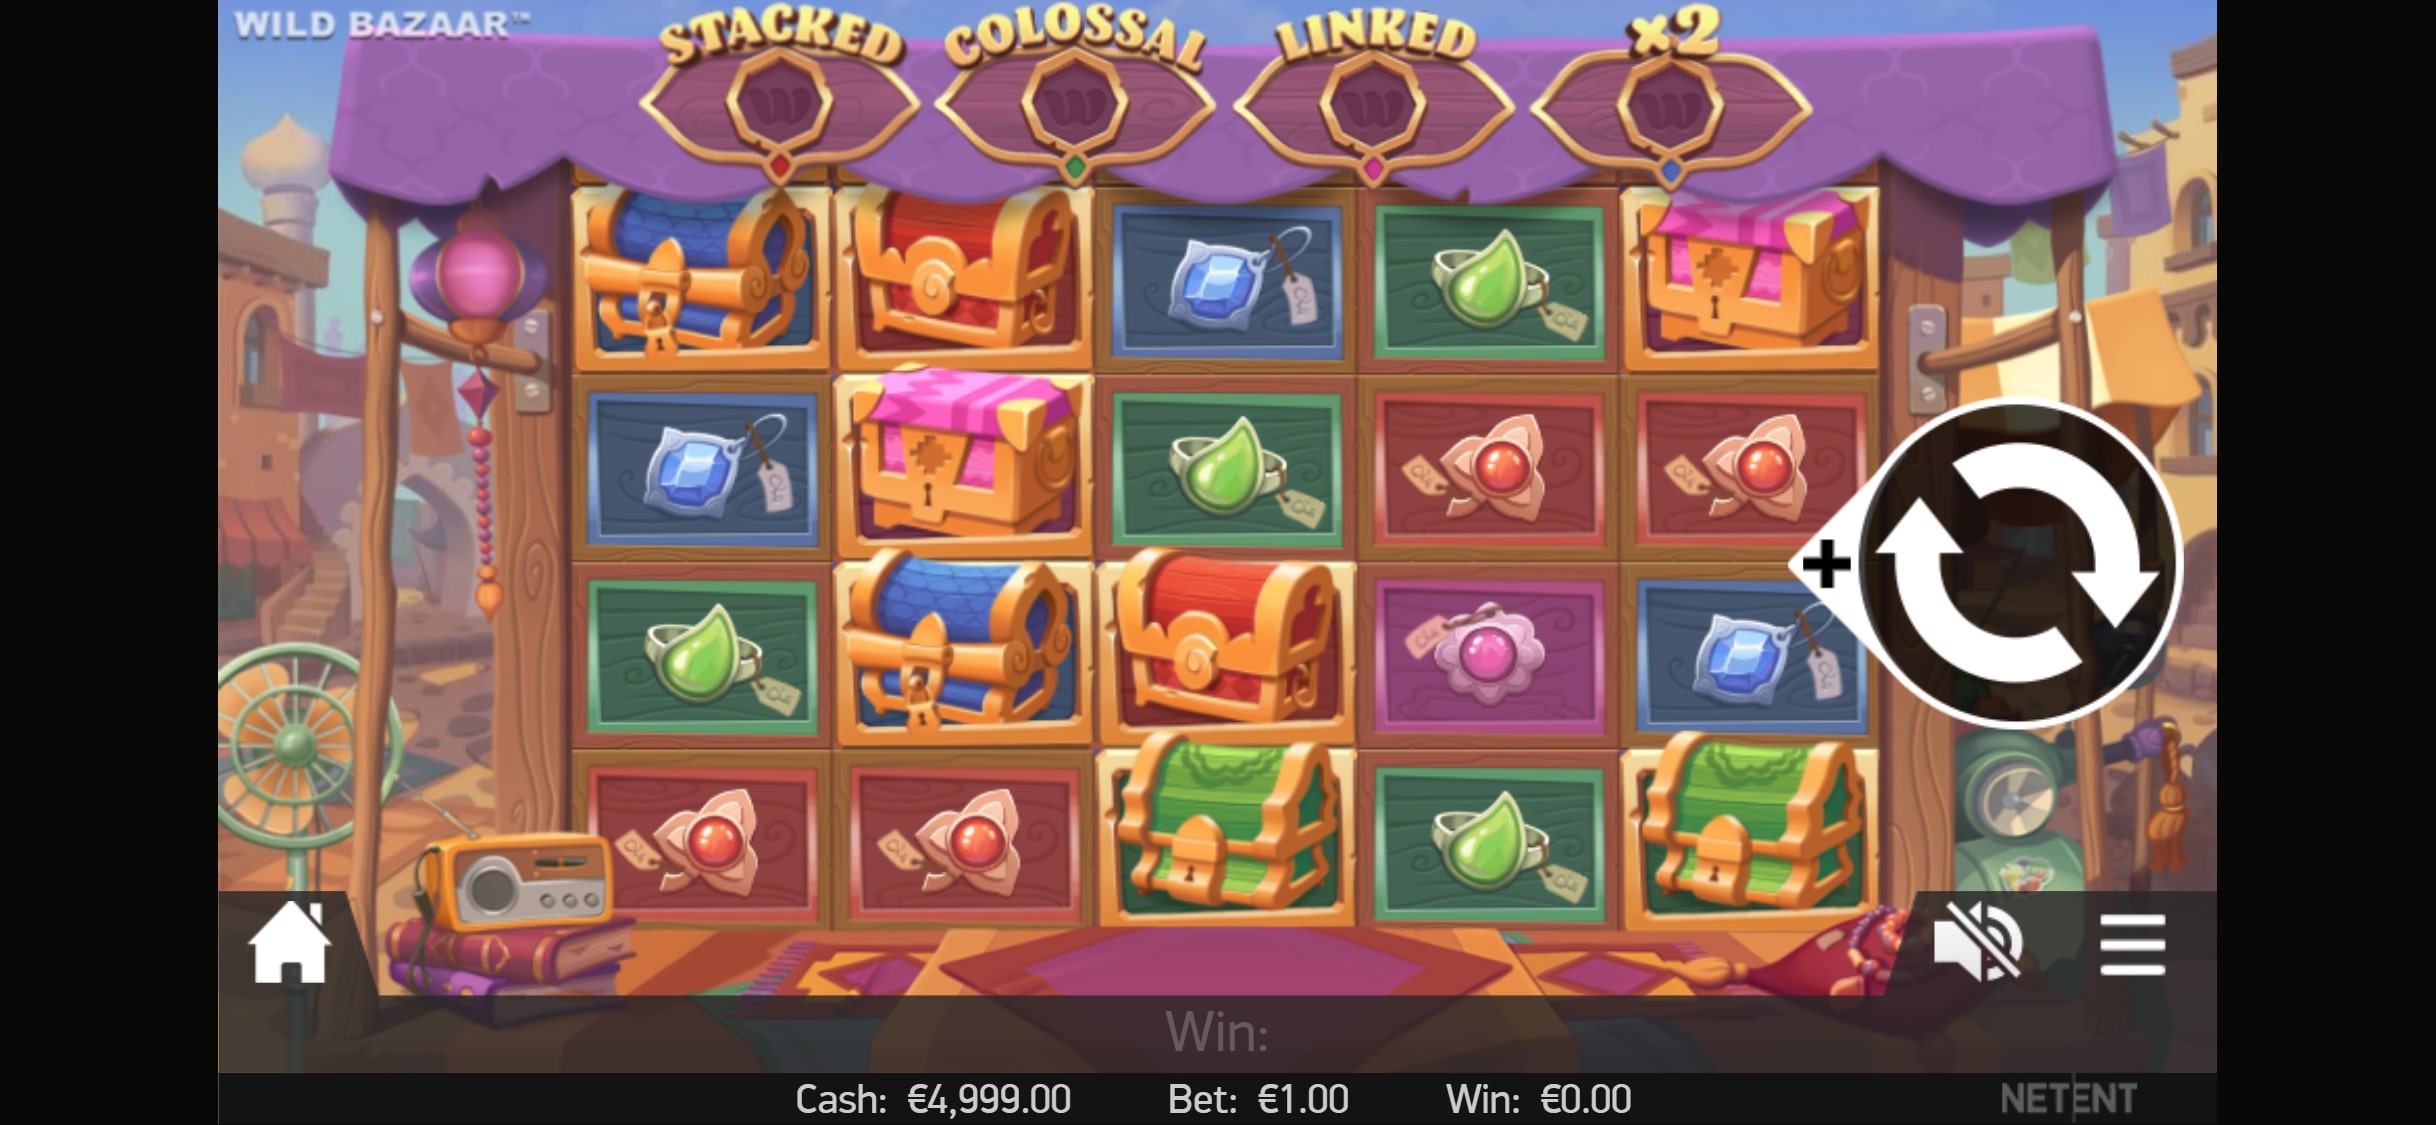 Sugar Casino Mobile Slot Games Review